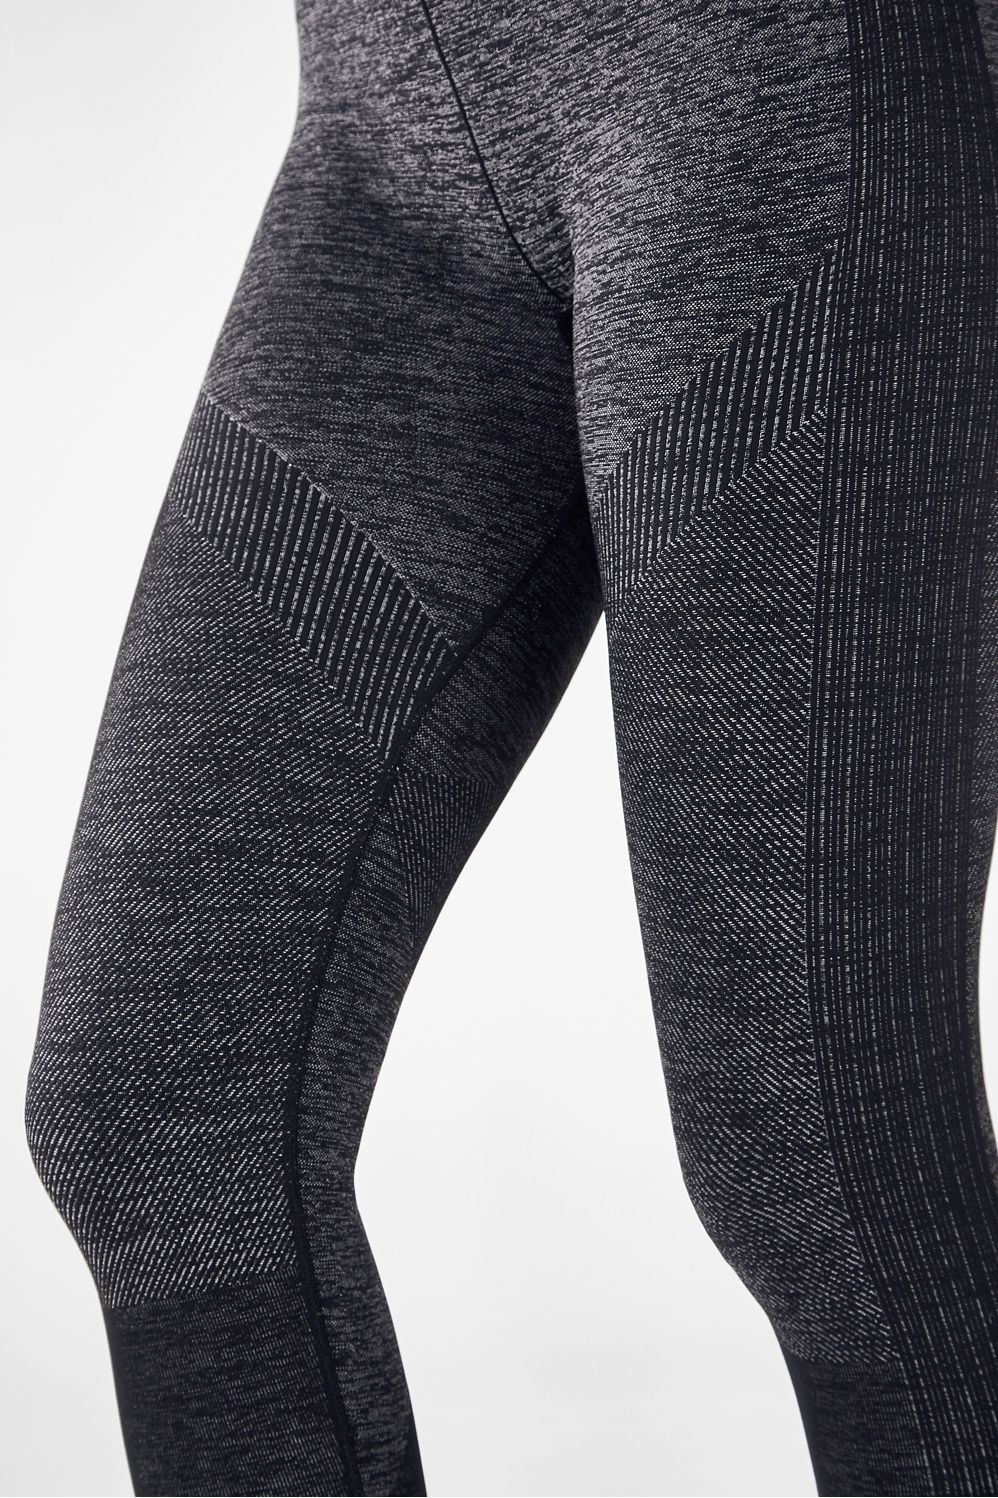 AZTEC Seamless Legging High Waist - Medium Grey Melange / Black